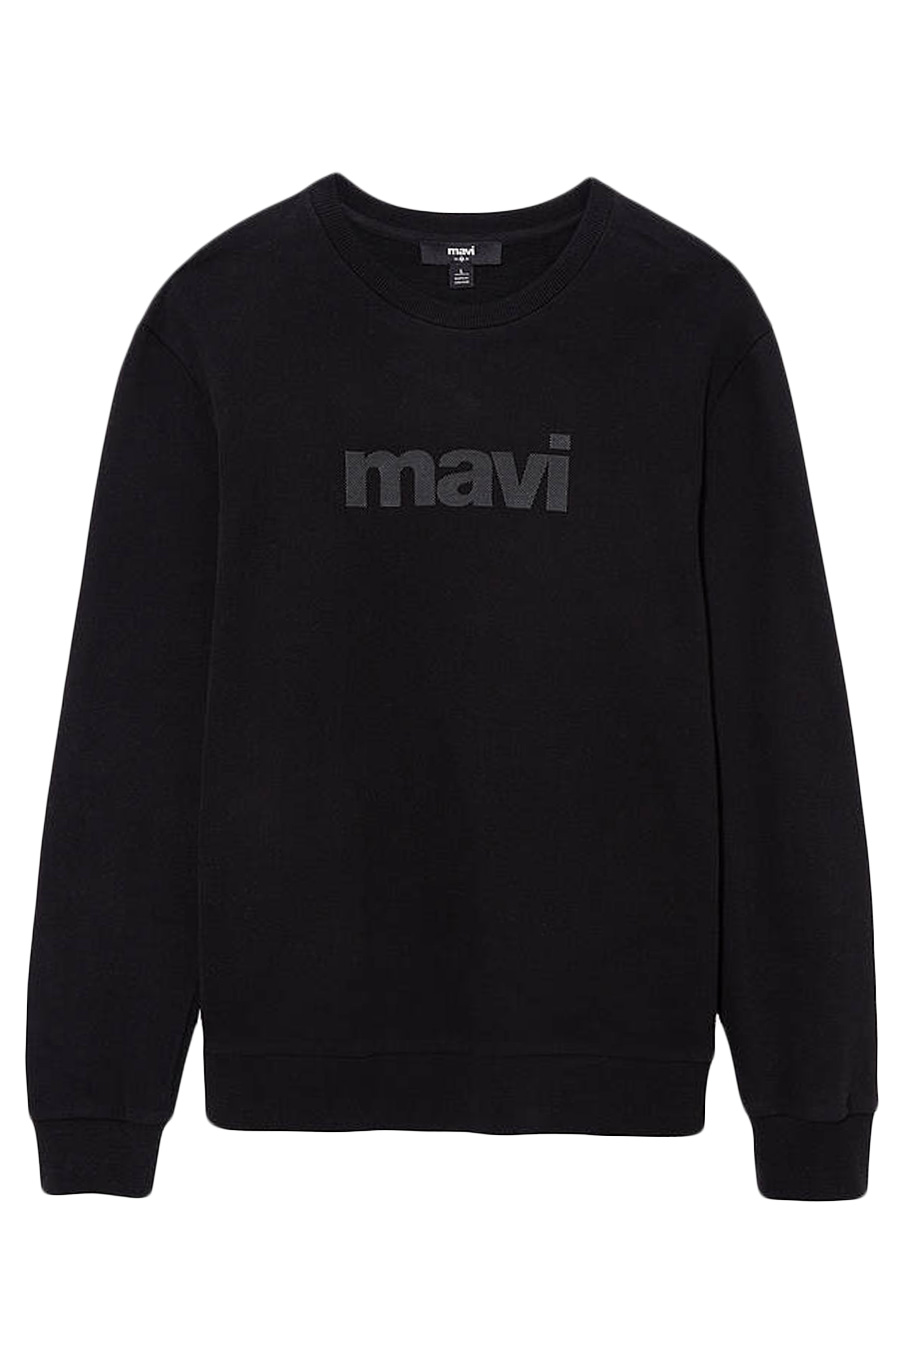 Спортивный свитер MAVI 066303-900